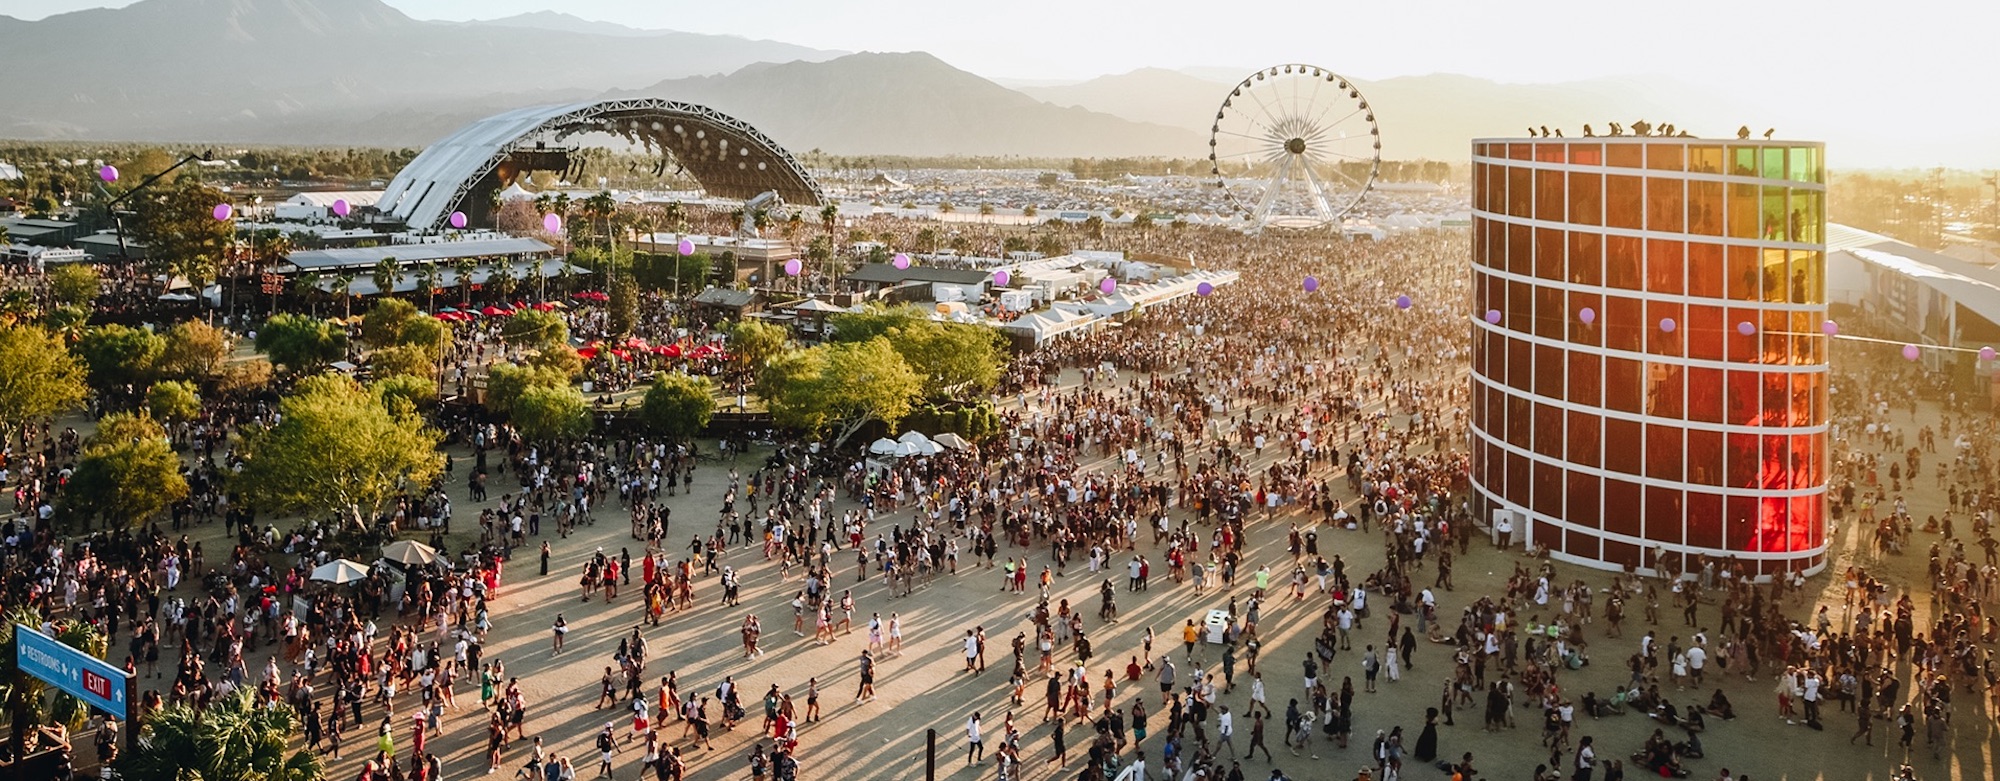 Coachella, Stagecoach Festivals Set to Return April 2022